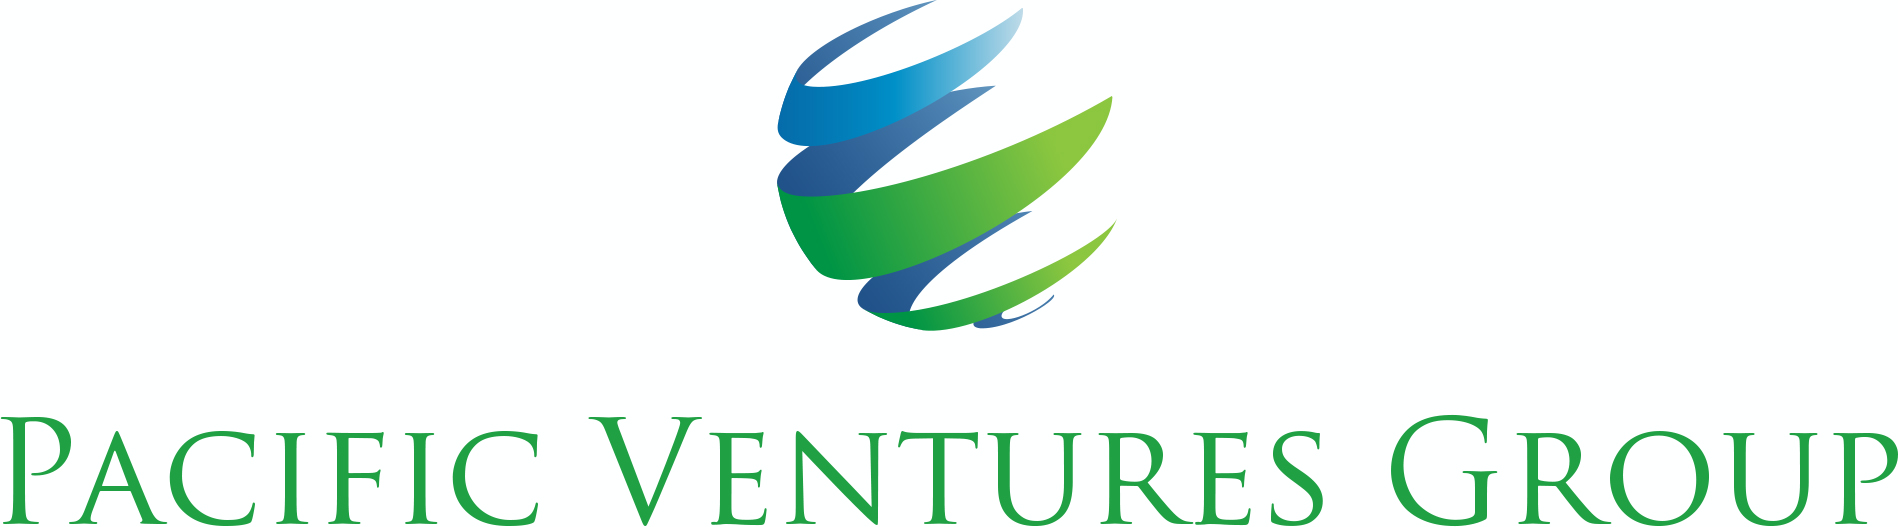 Pacific Ventures Group INC, Monday, June 22, 2020, Press release picture